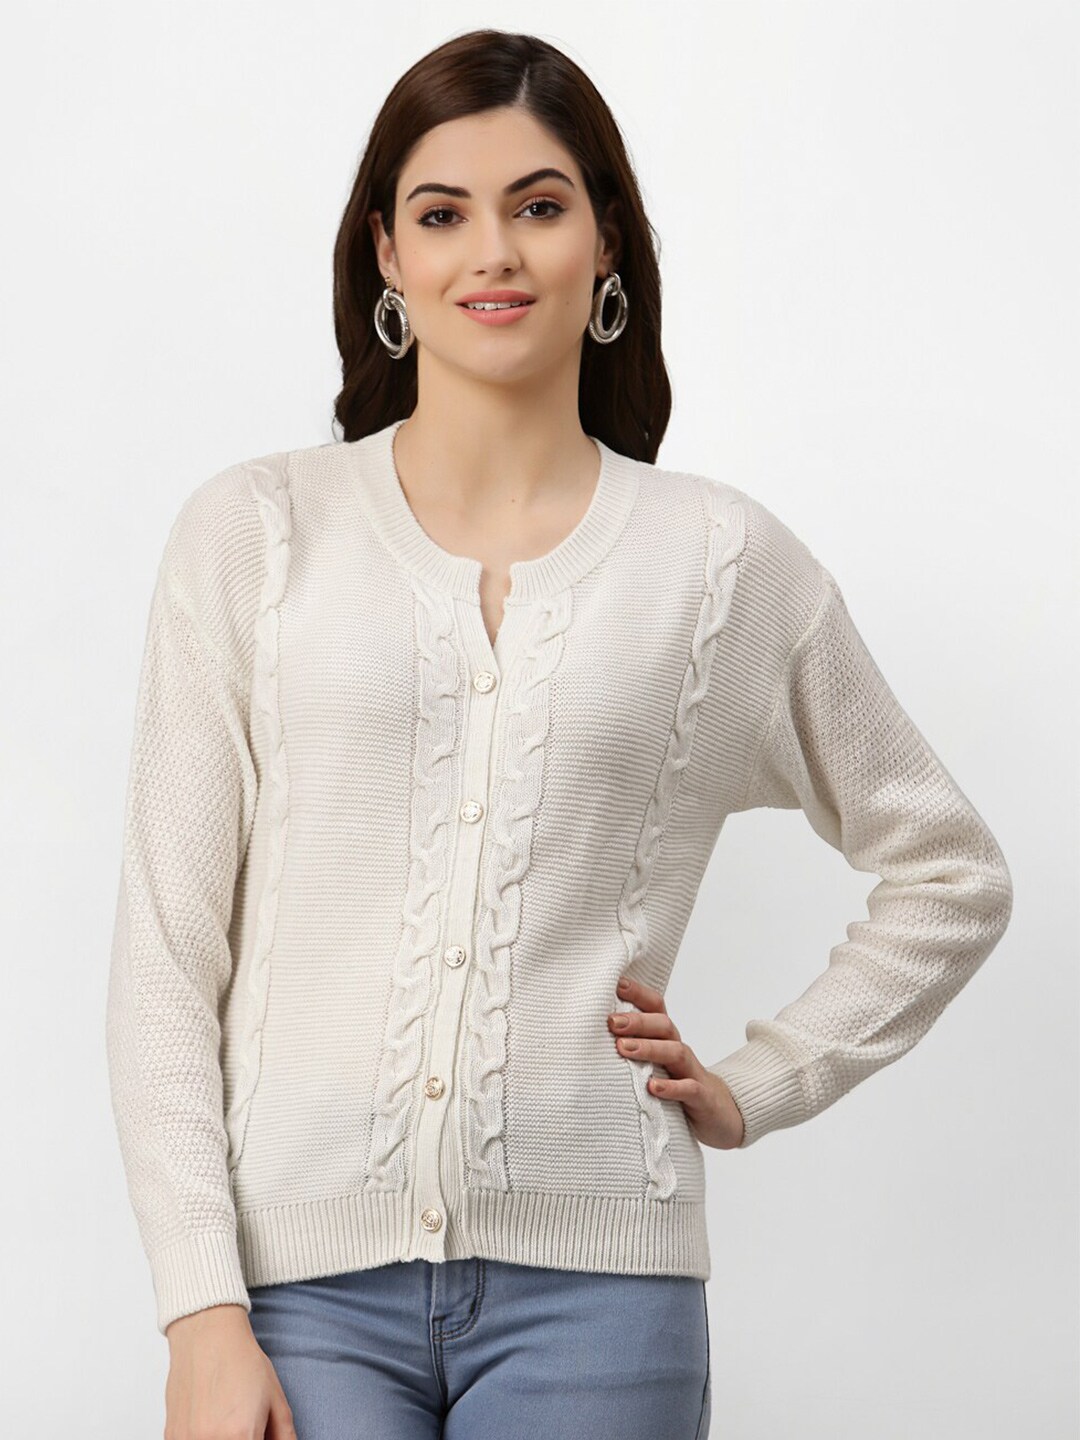 Miramor Women White Self Design Cable Knit Cardigan Sweater Price in India